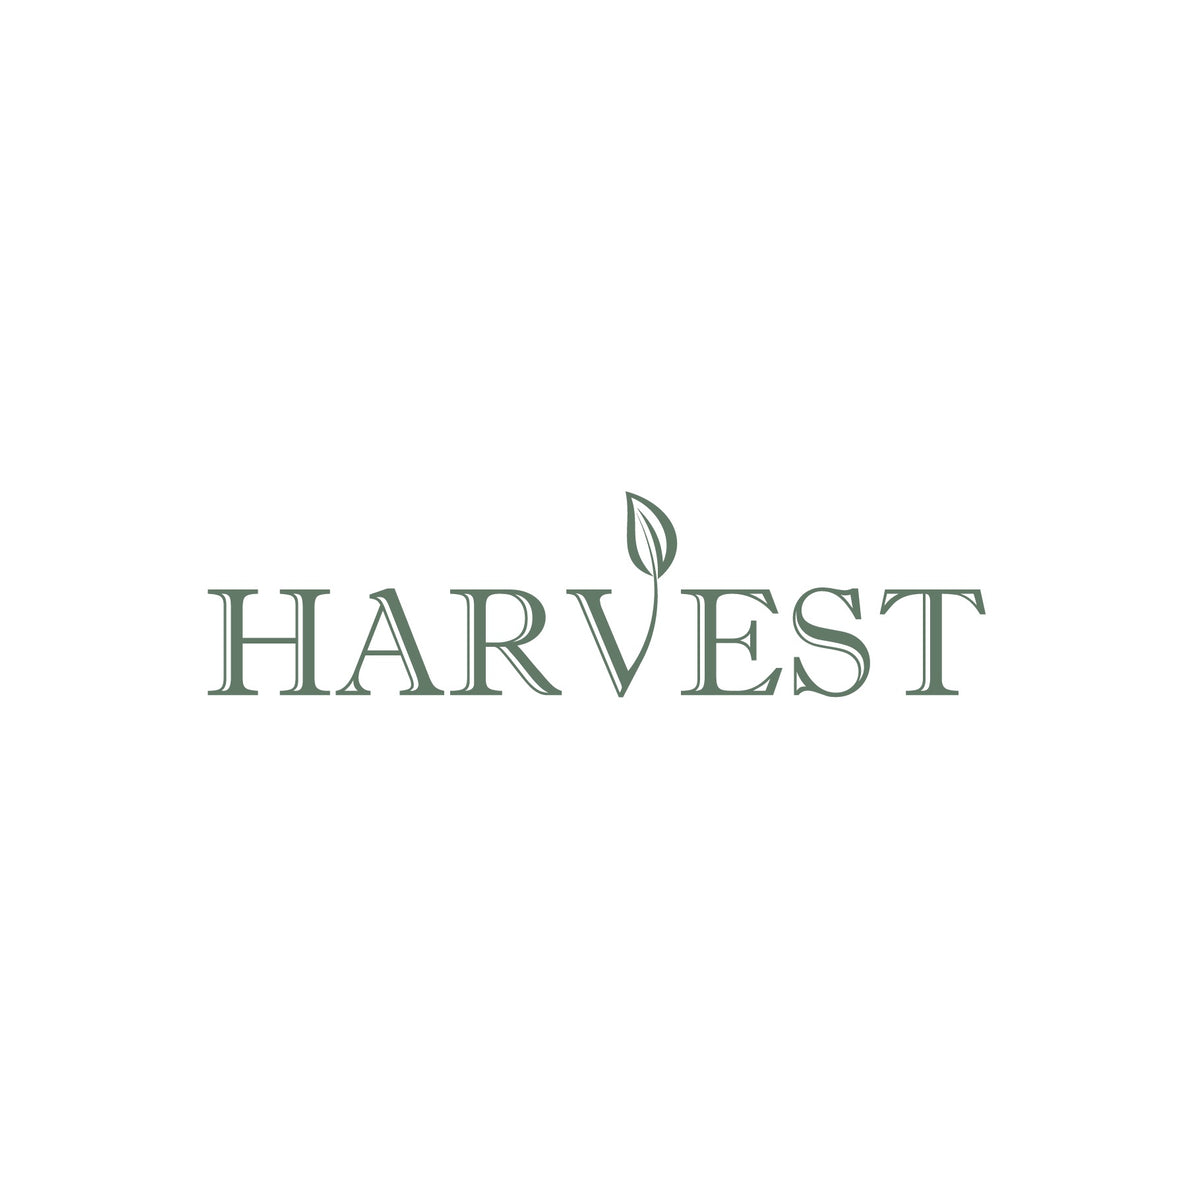 ”Harvest